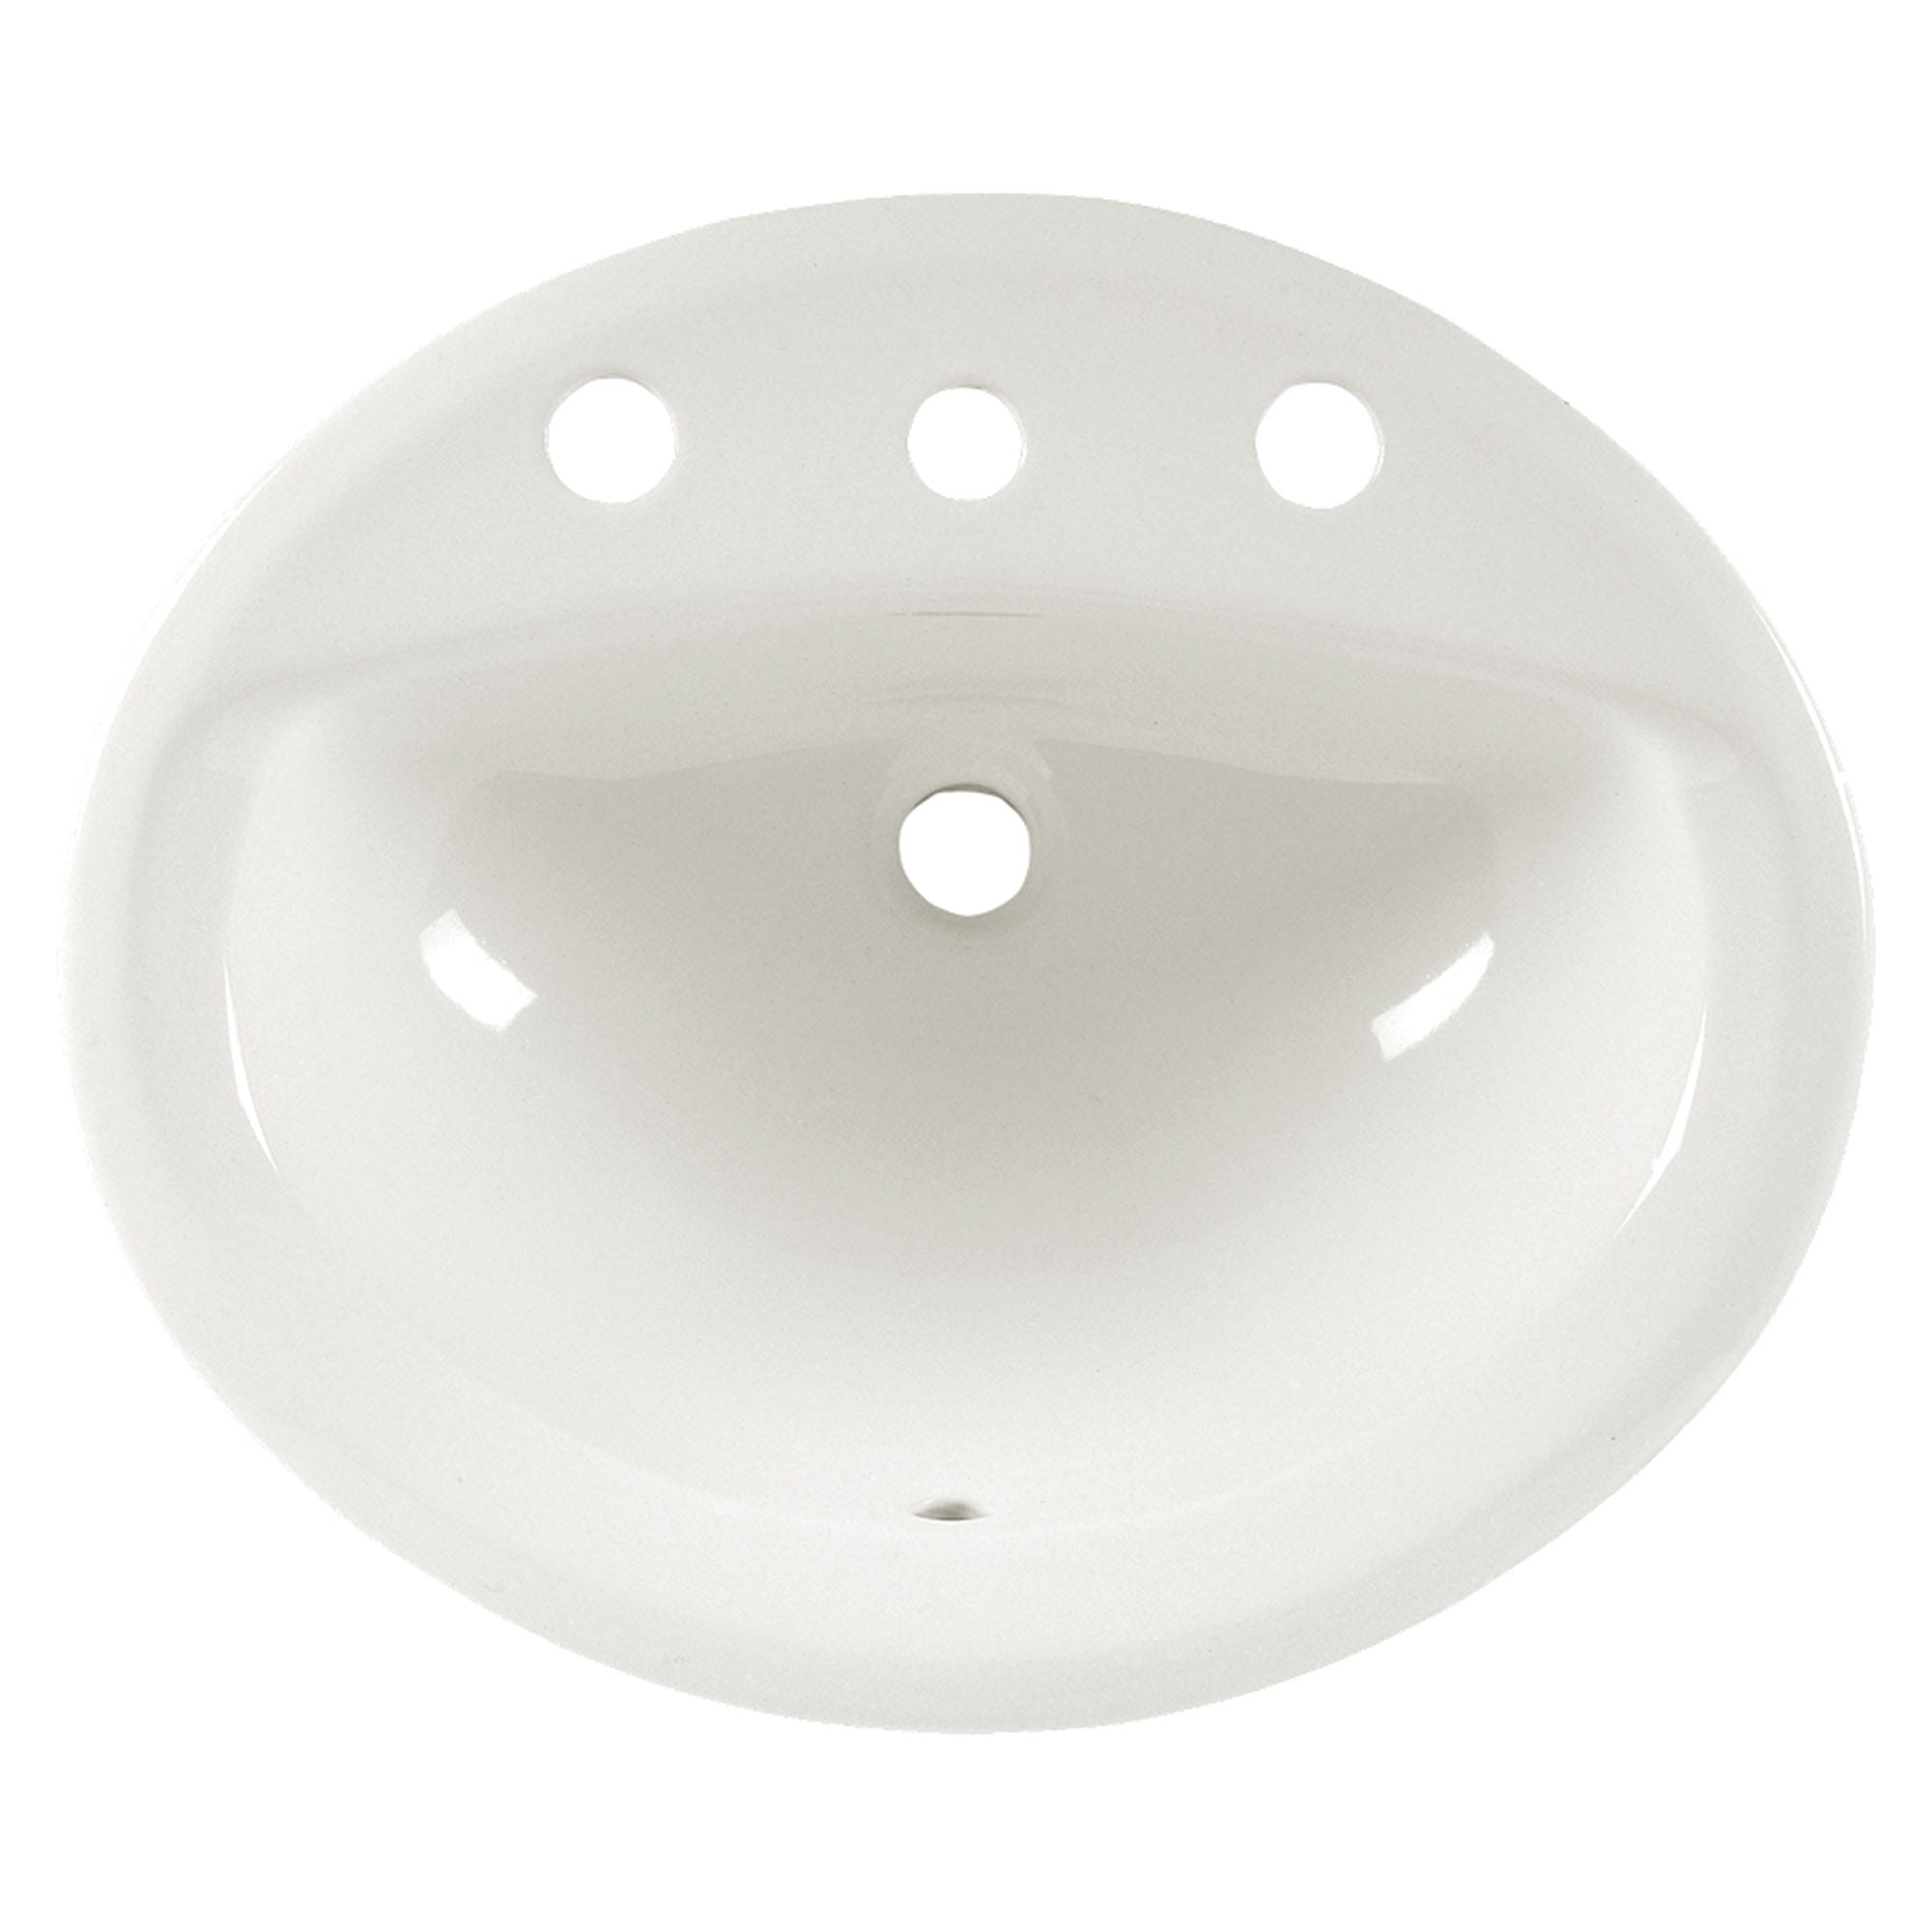 Aqualyn® Drop-In Sink With 8-Inch Widespread